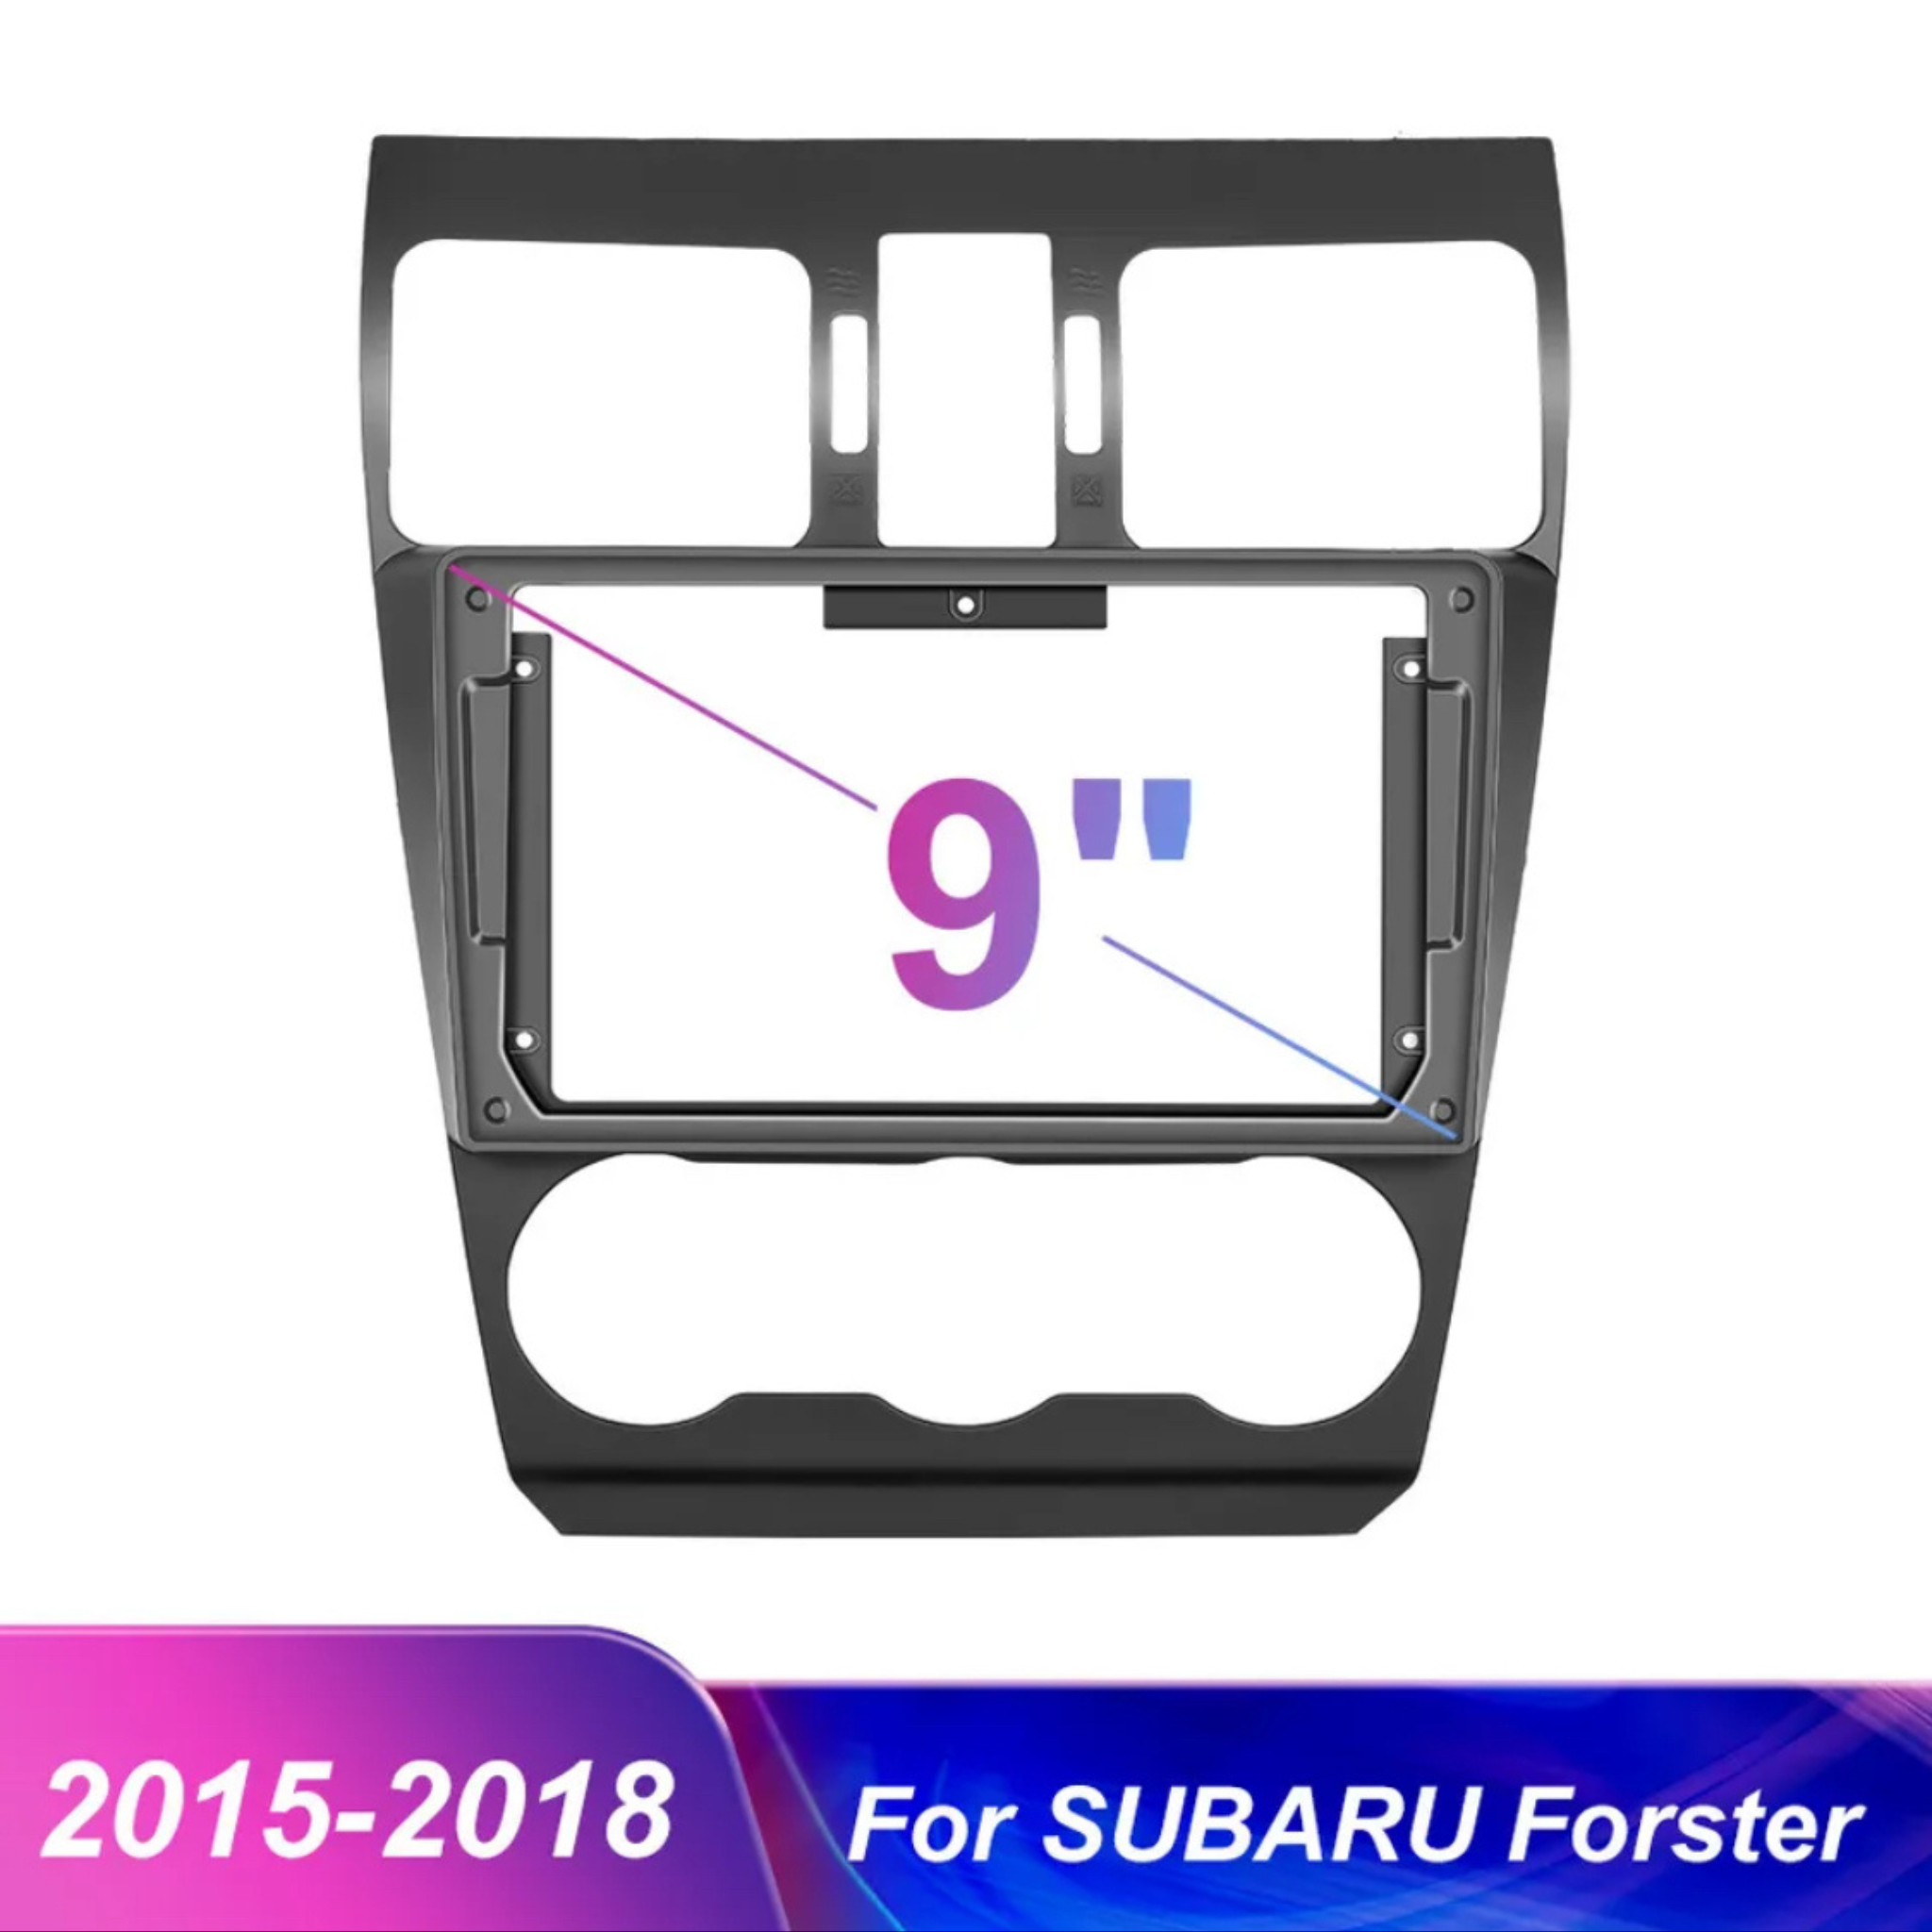 Subaru Forester 2015-2018 Apple CarPlay and Android Auto Plug and Plug Head Unit Upgrade Kit